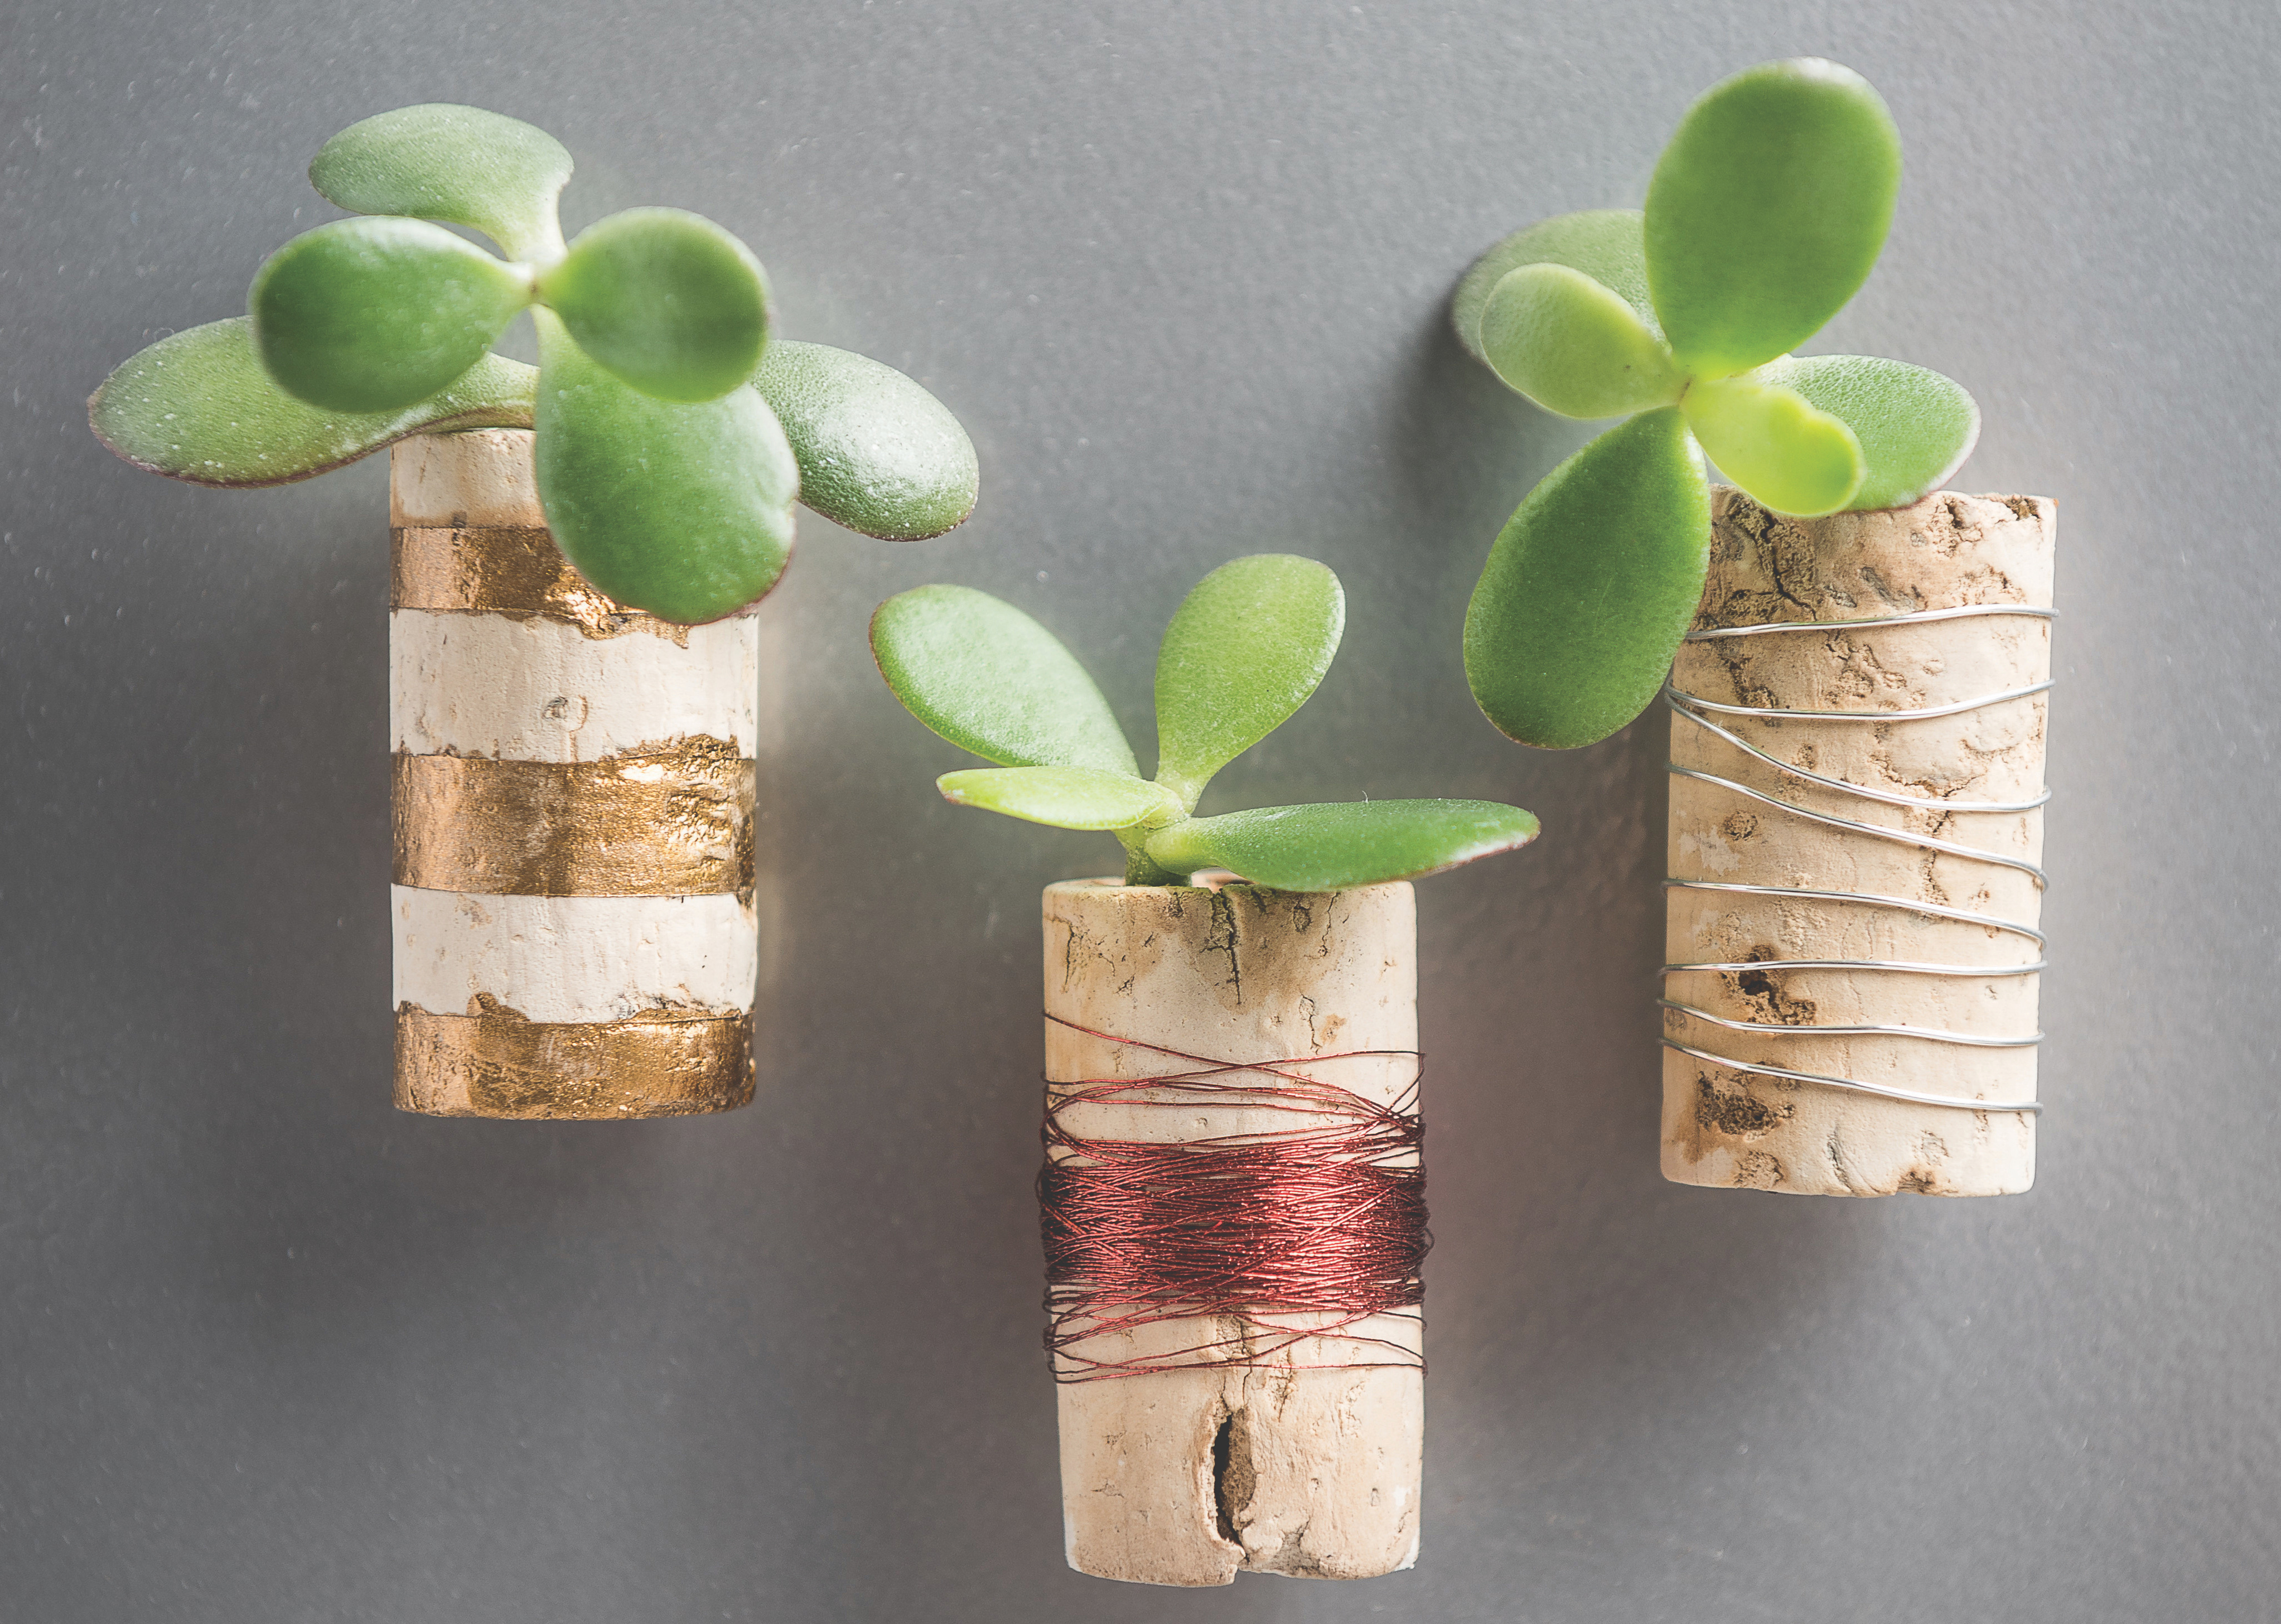 How to make cork planters – landscape